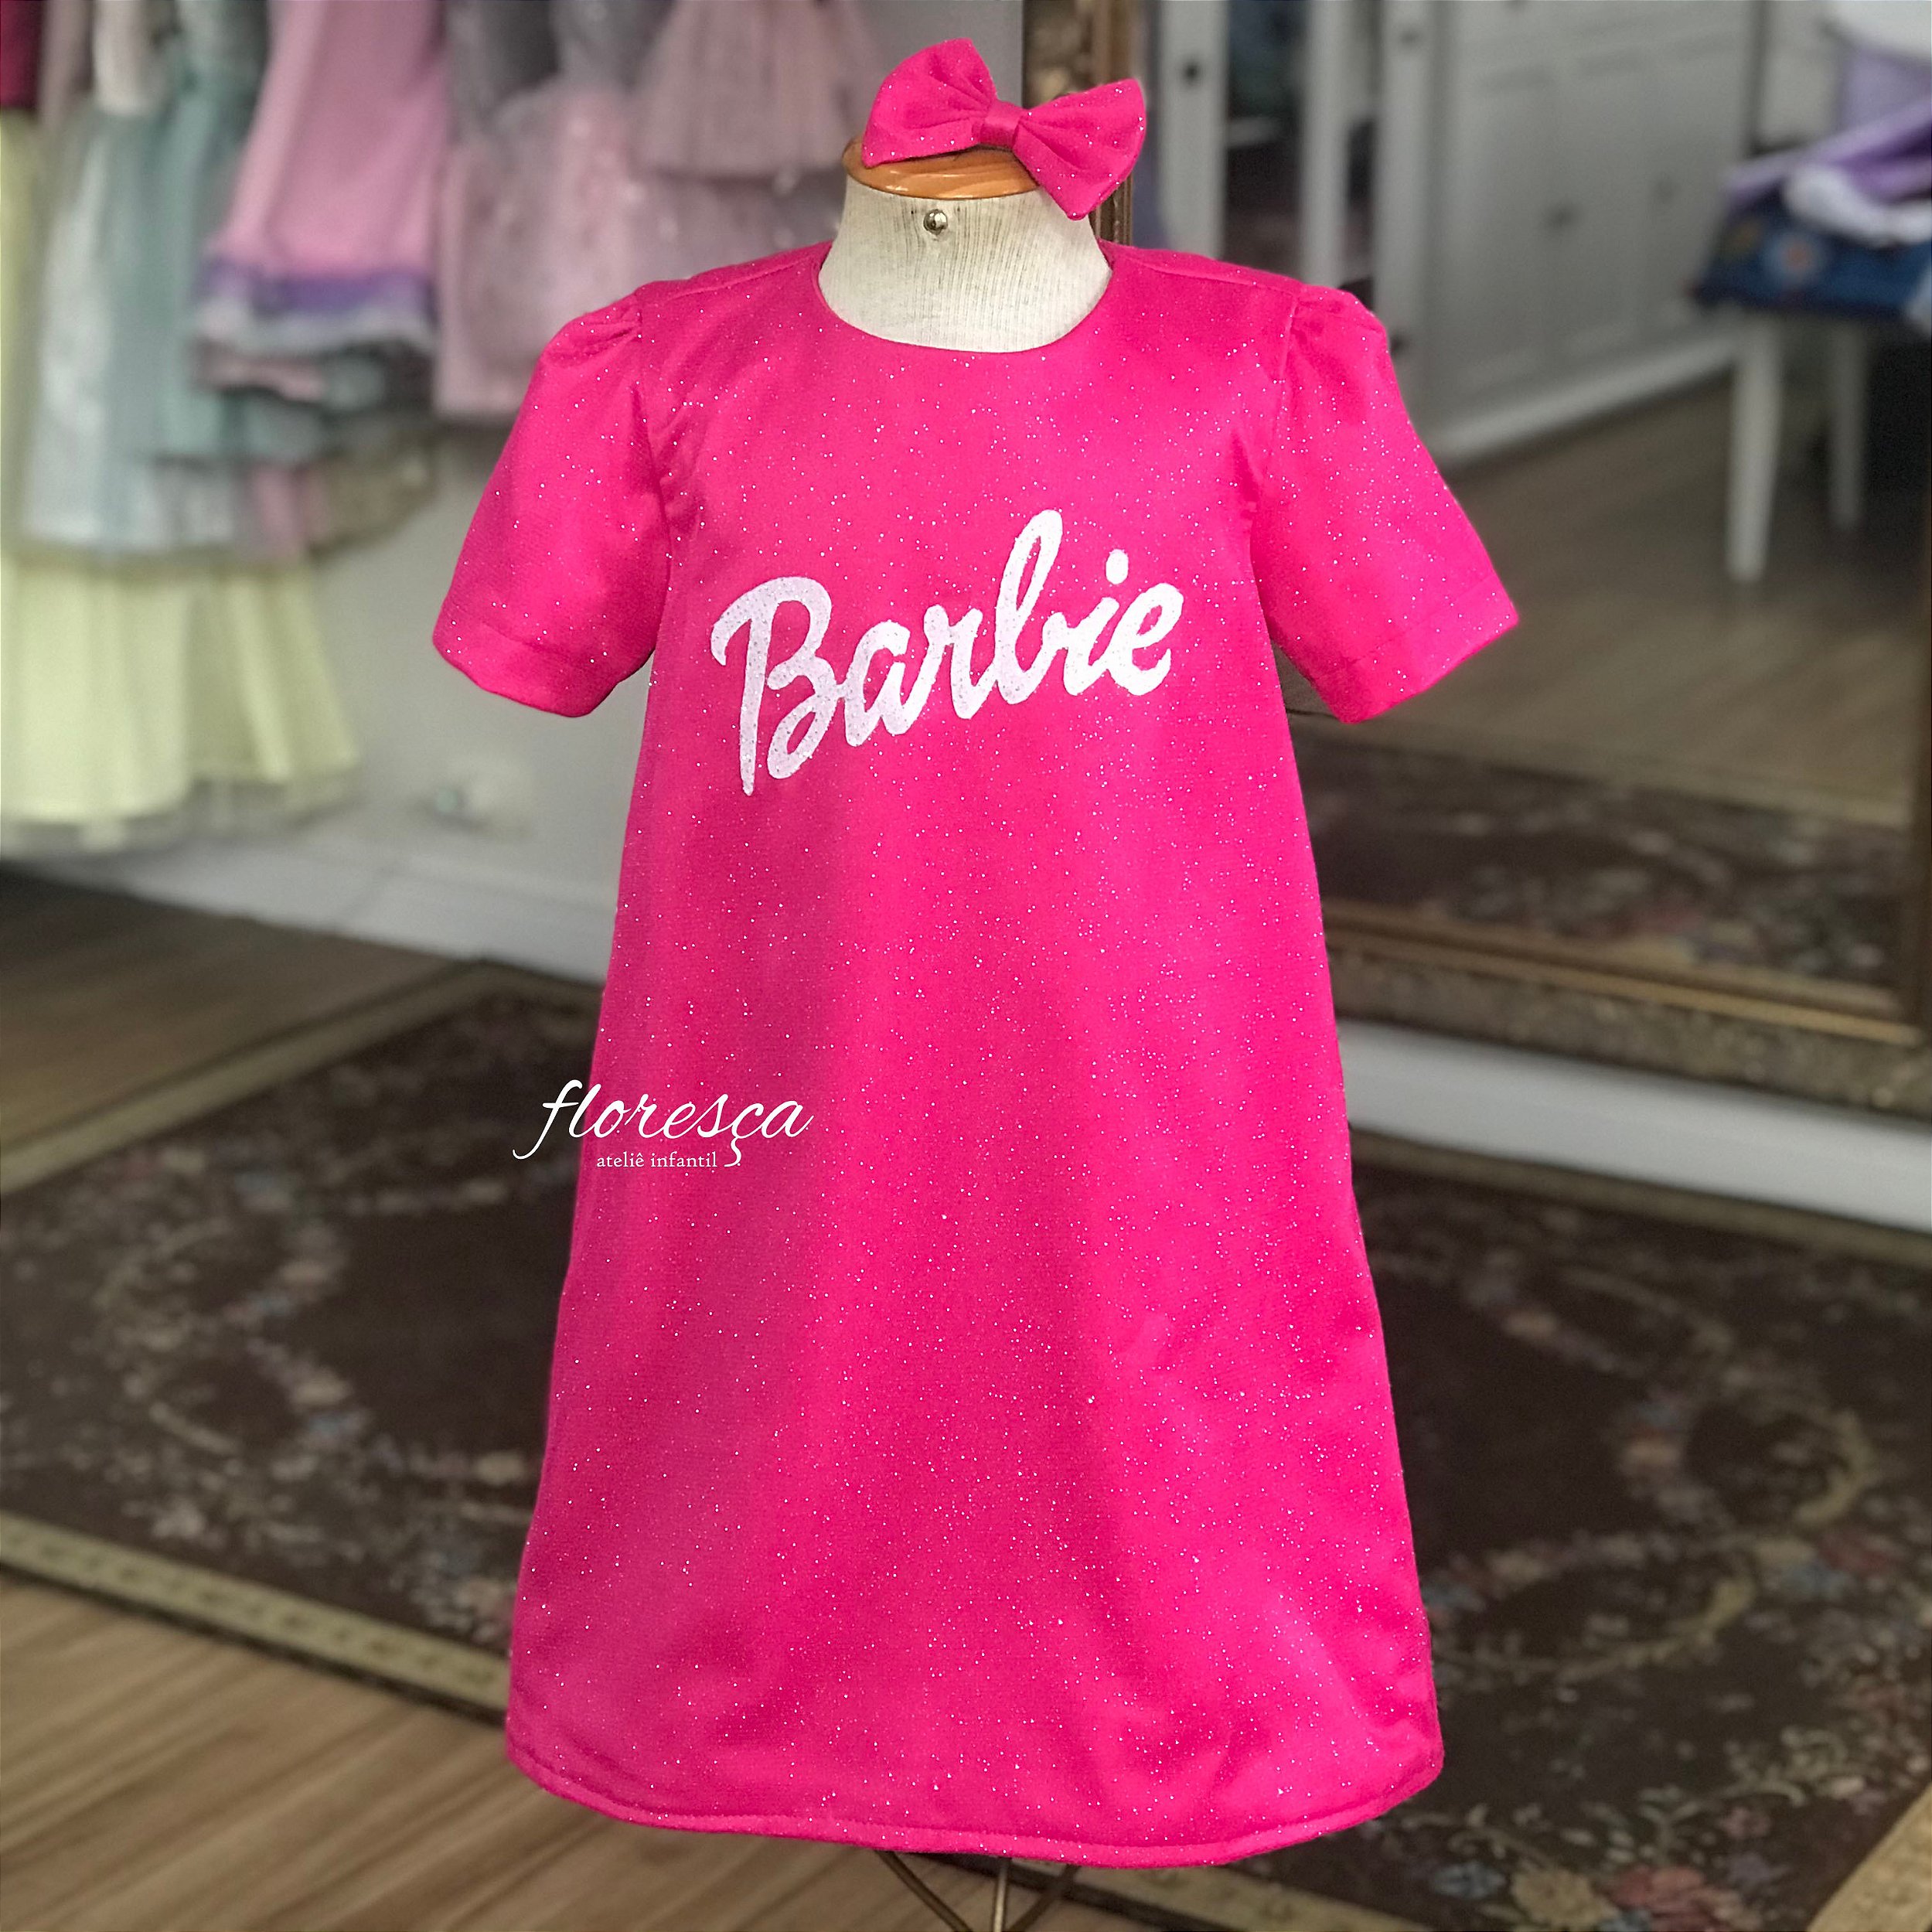 Aniversario Vestido Da Barbie